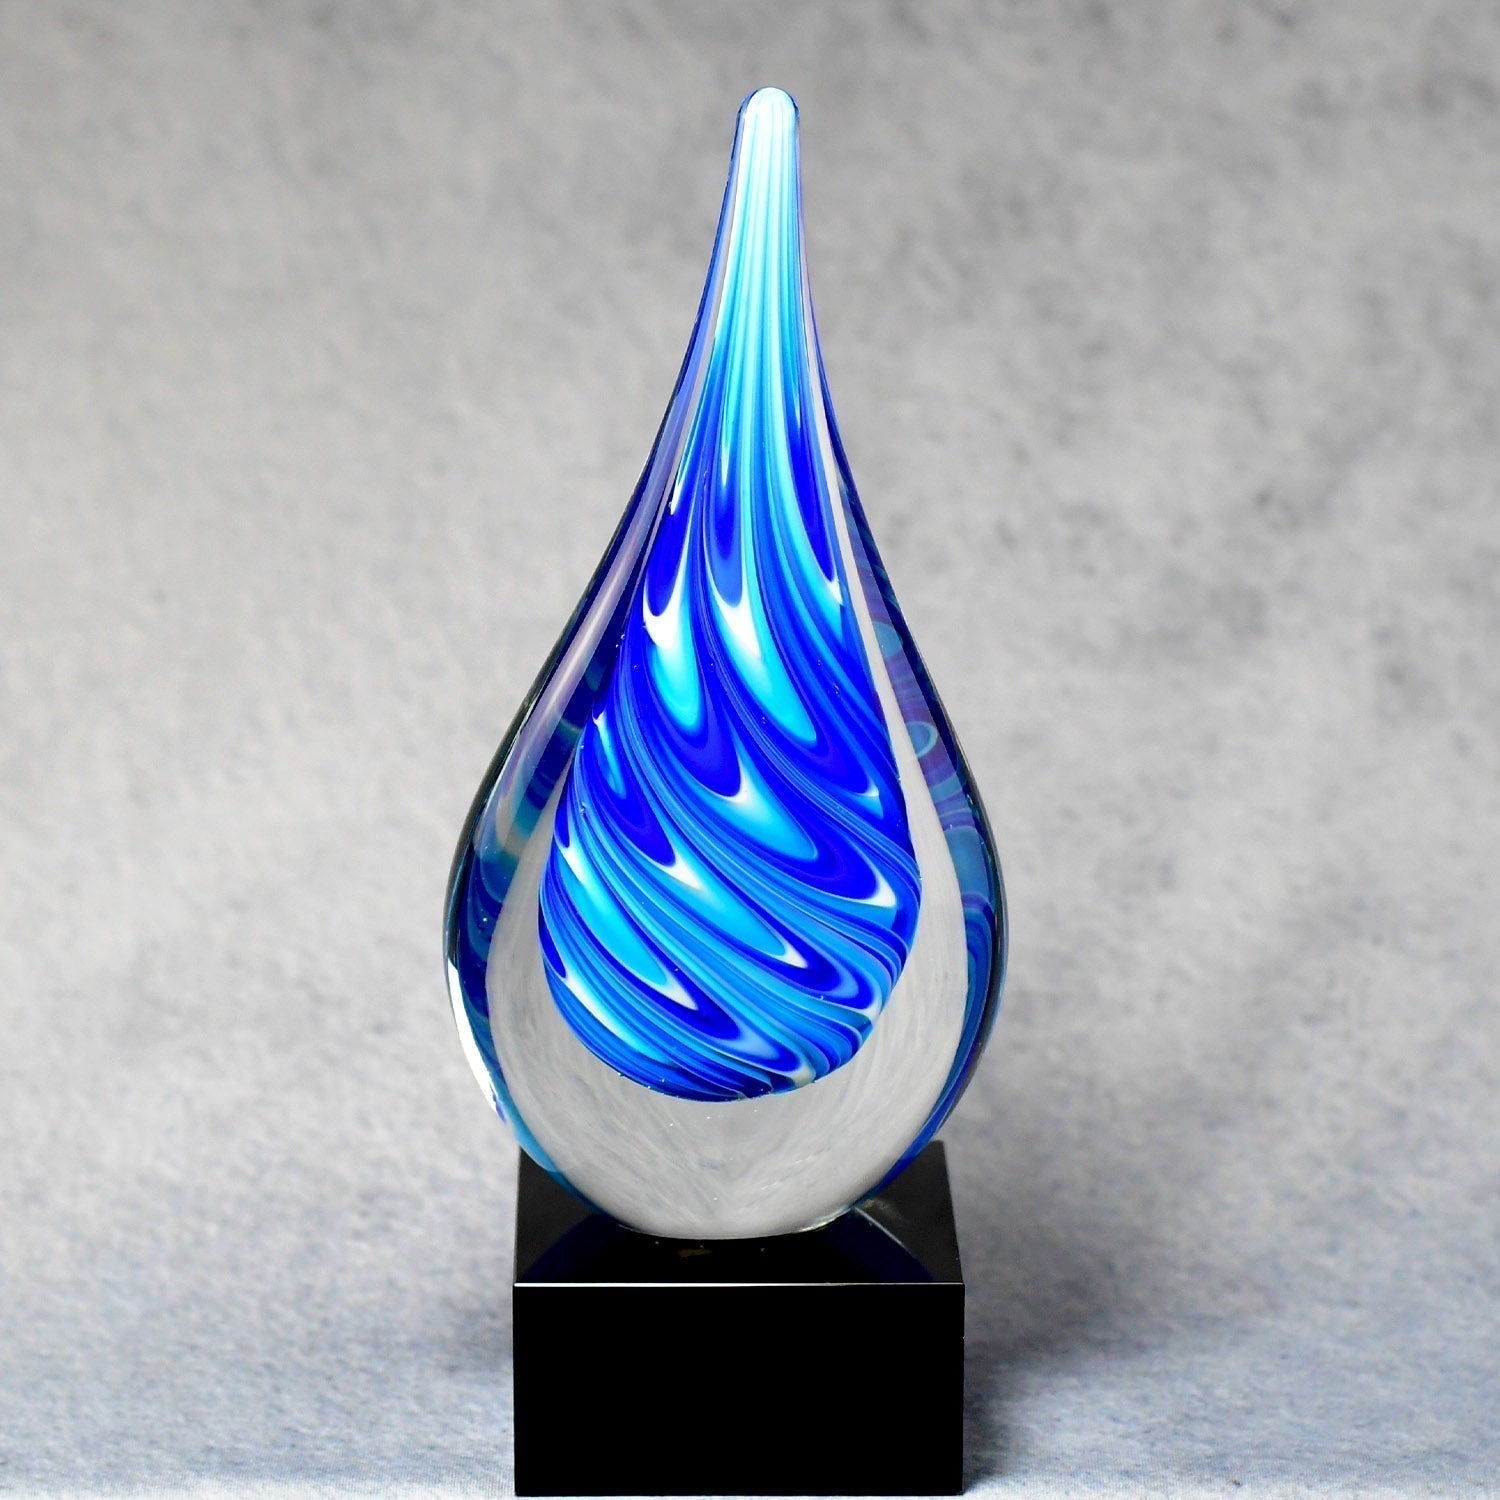 Blue/White Teardrop On Black Glass Base | Alliance Awards LLC.